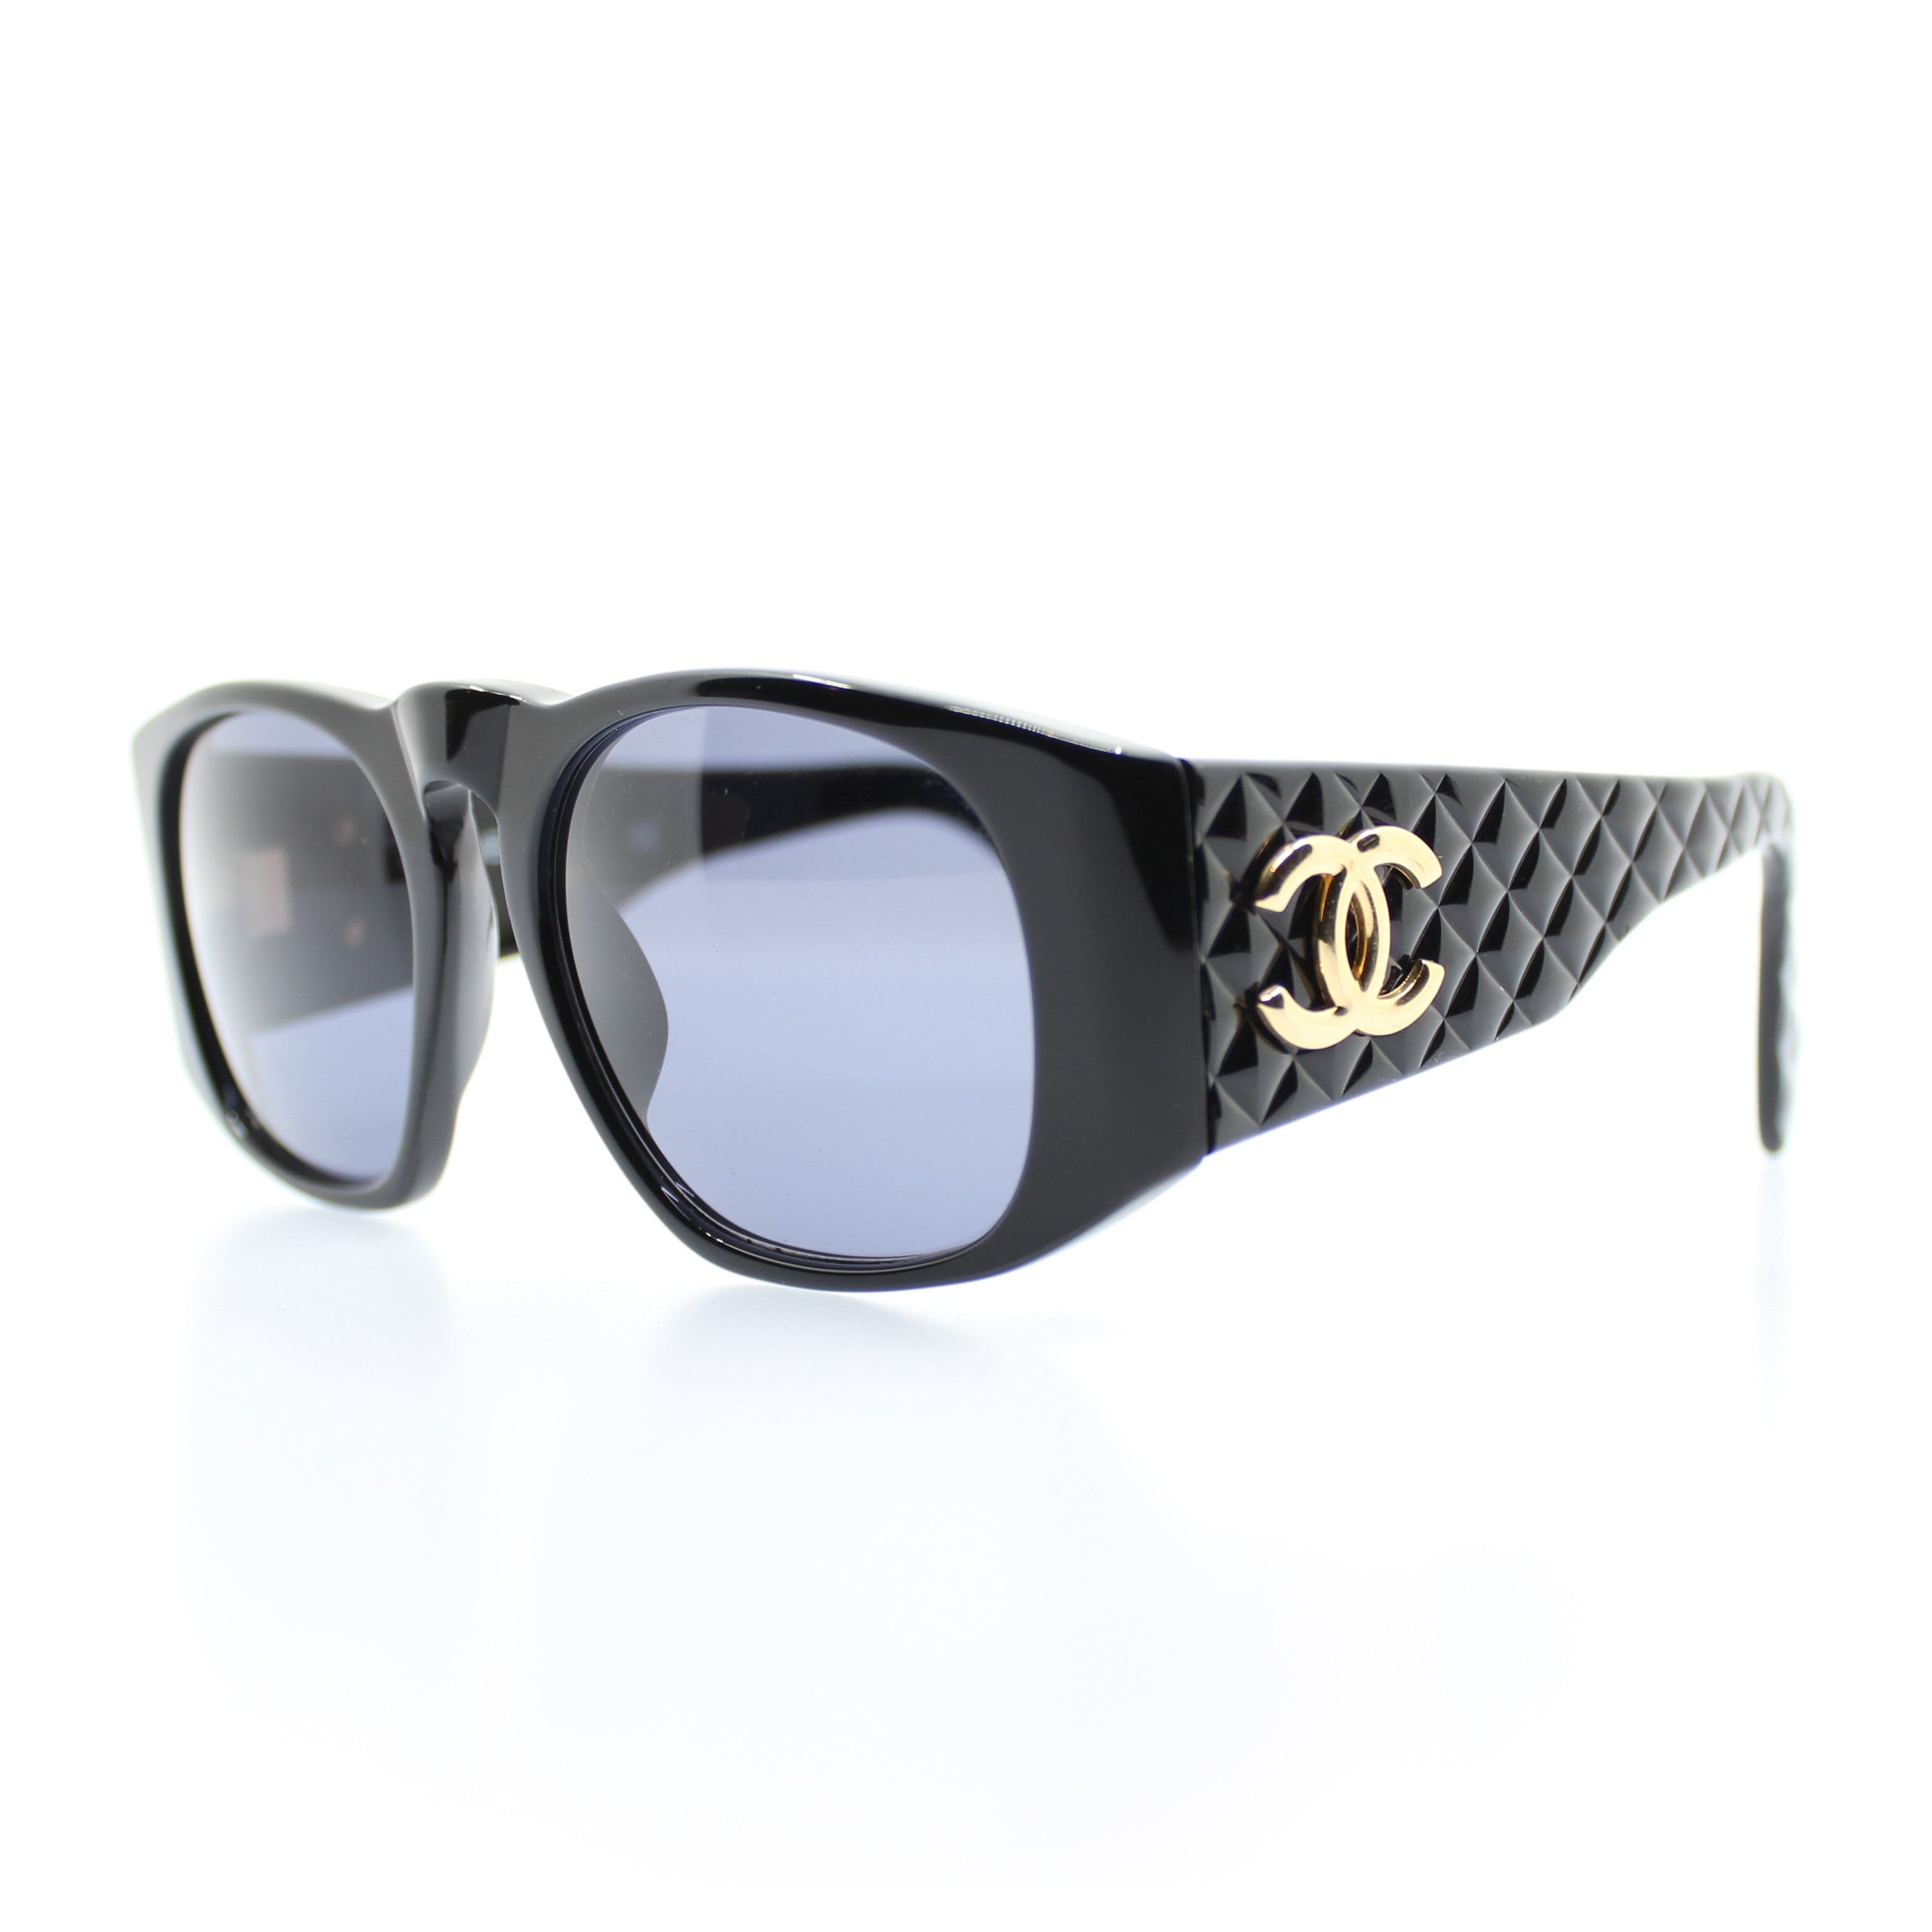 Chanel sunglasses ladies black - Gem